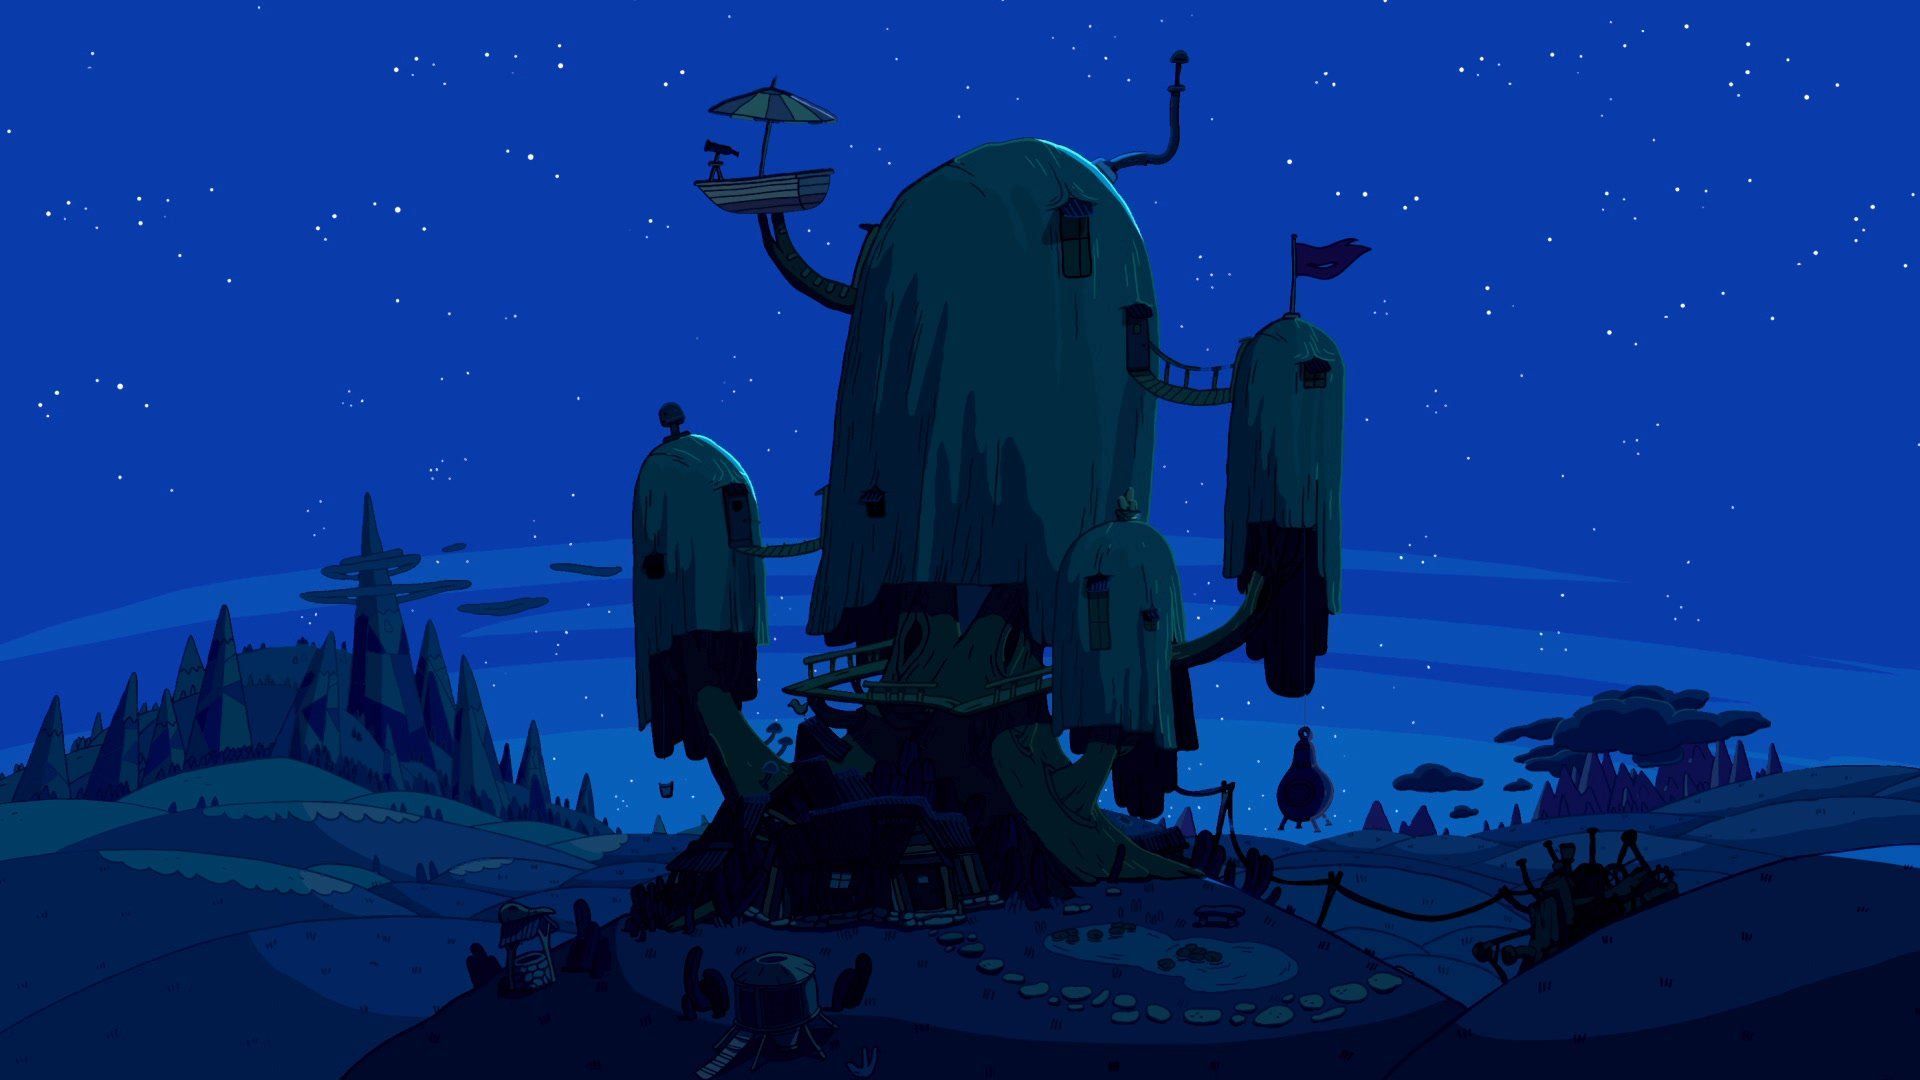 Image Gallery of Adventure Time Season 6: Episode 27